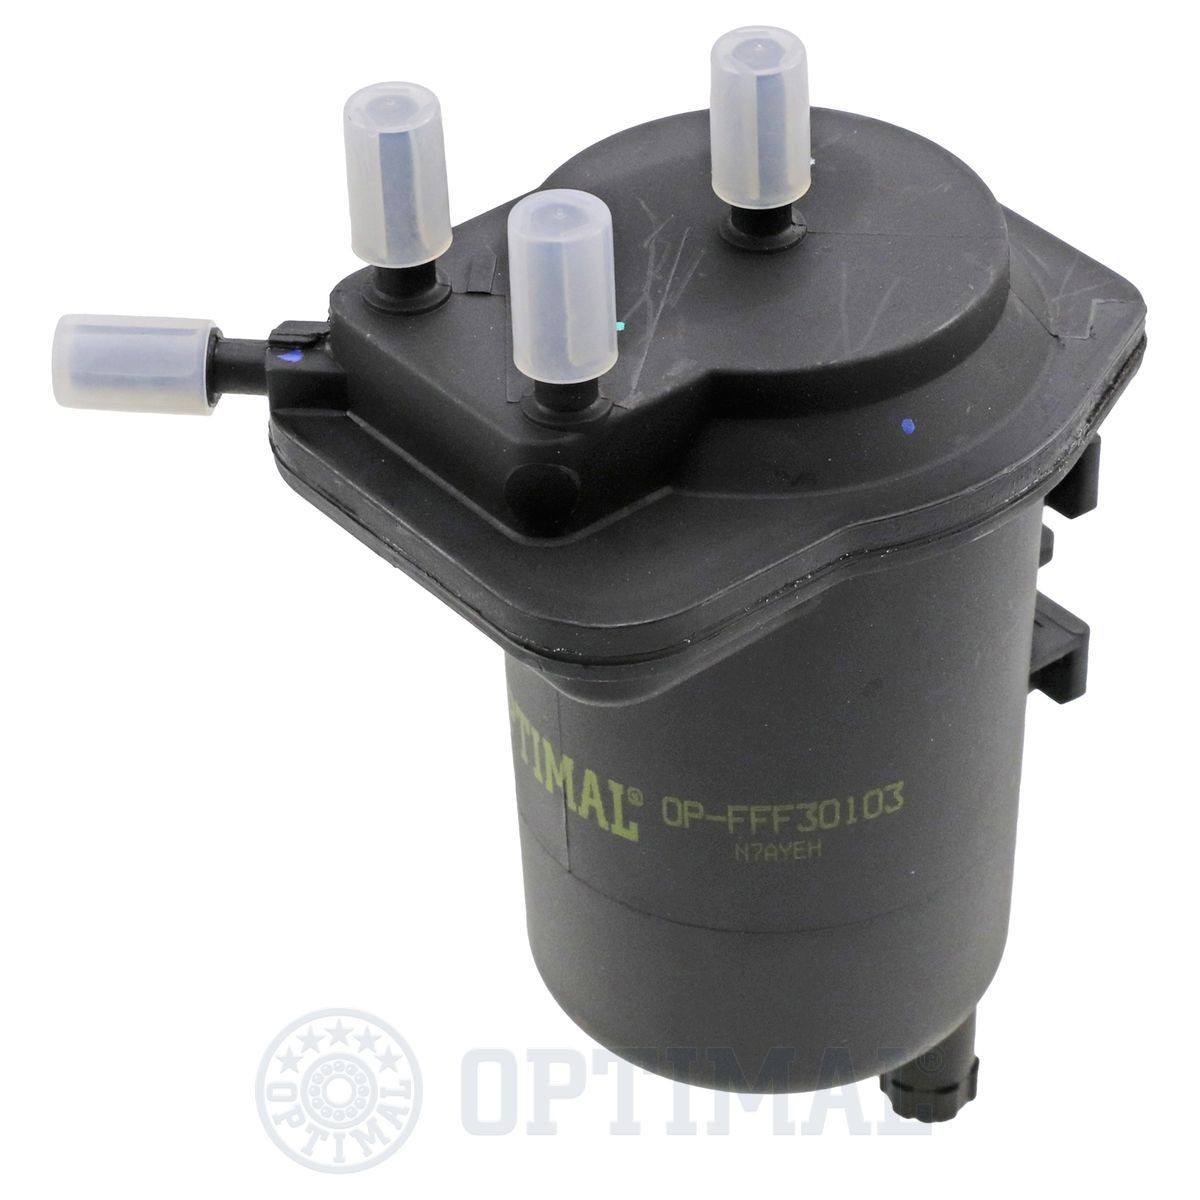 OPTIMAL OP-FFF30103 Fuel filter 15410-84A00-000